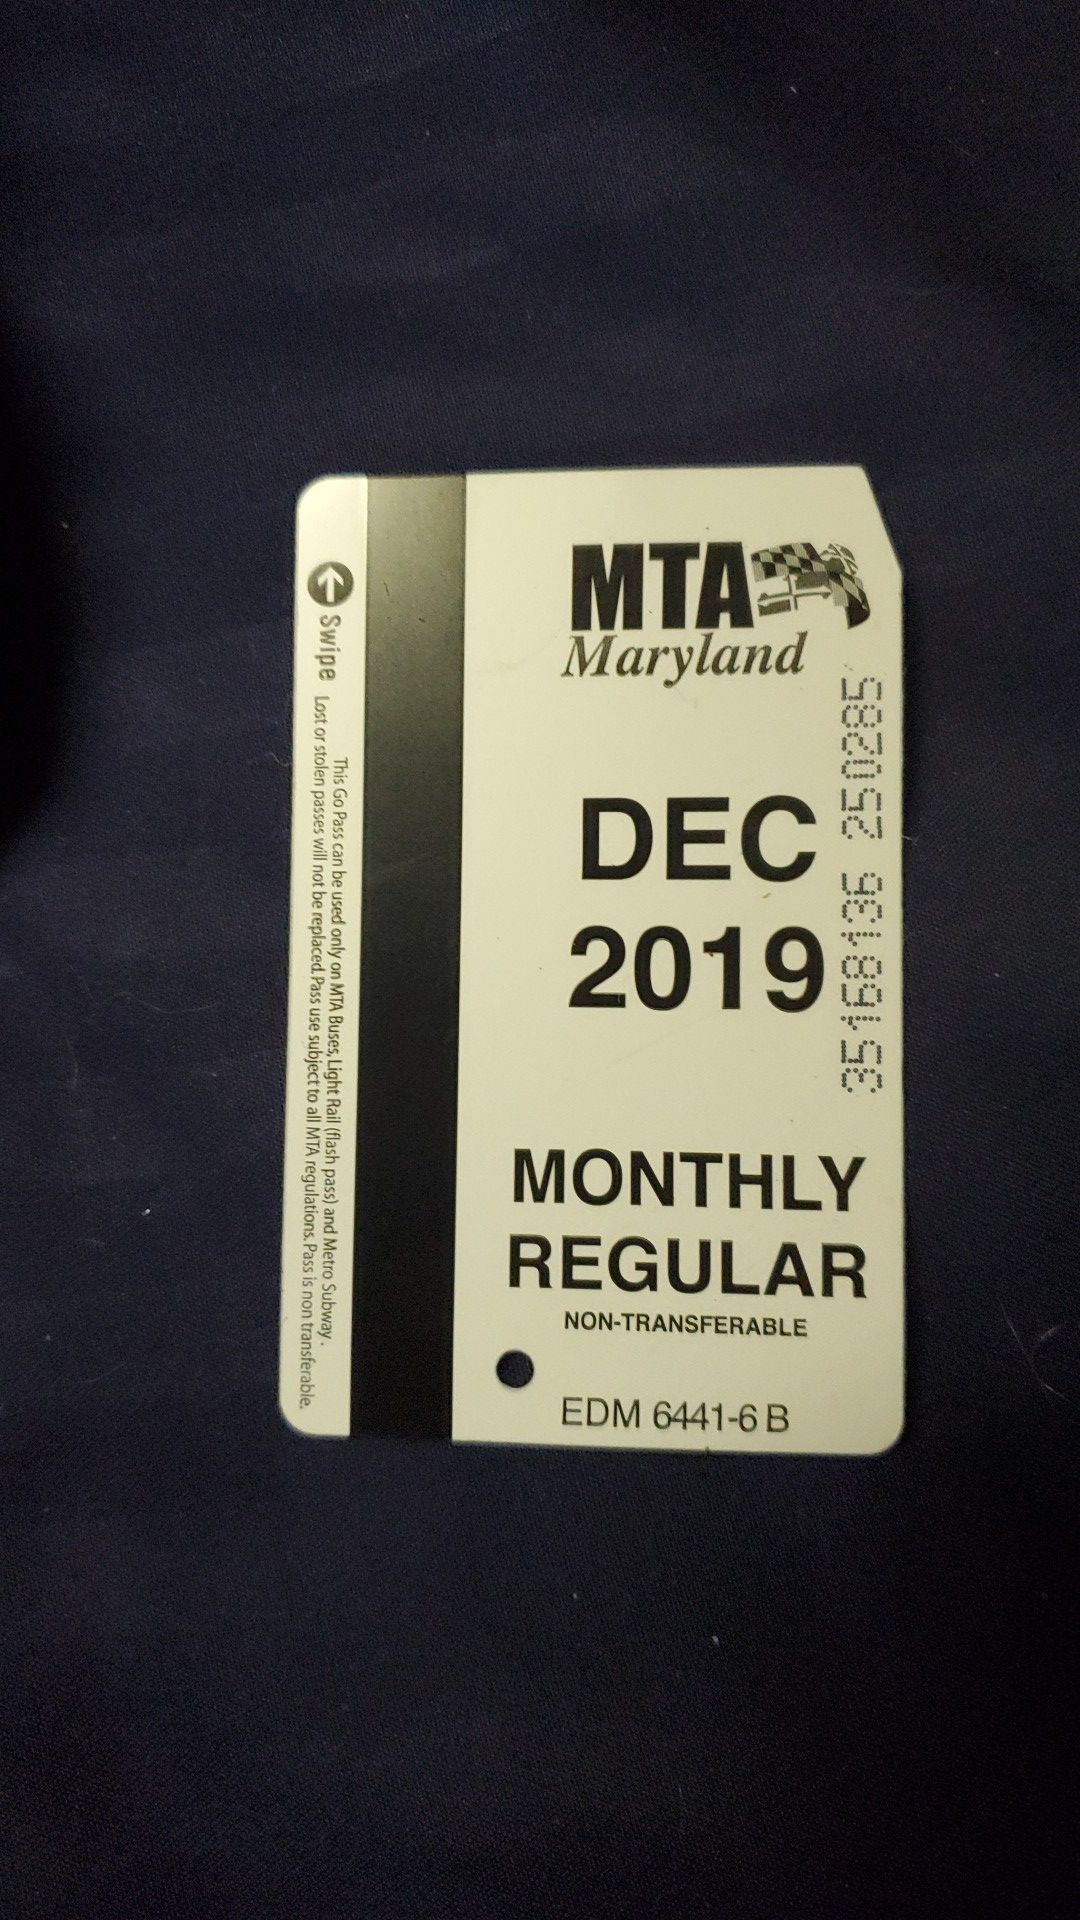 December monthly MTA pass